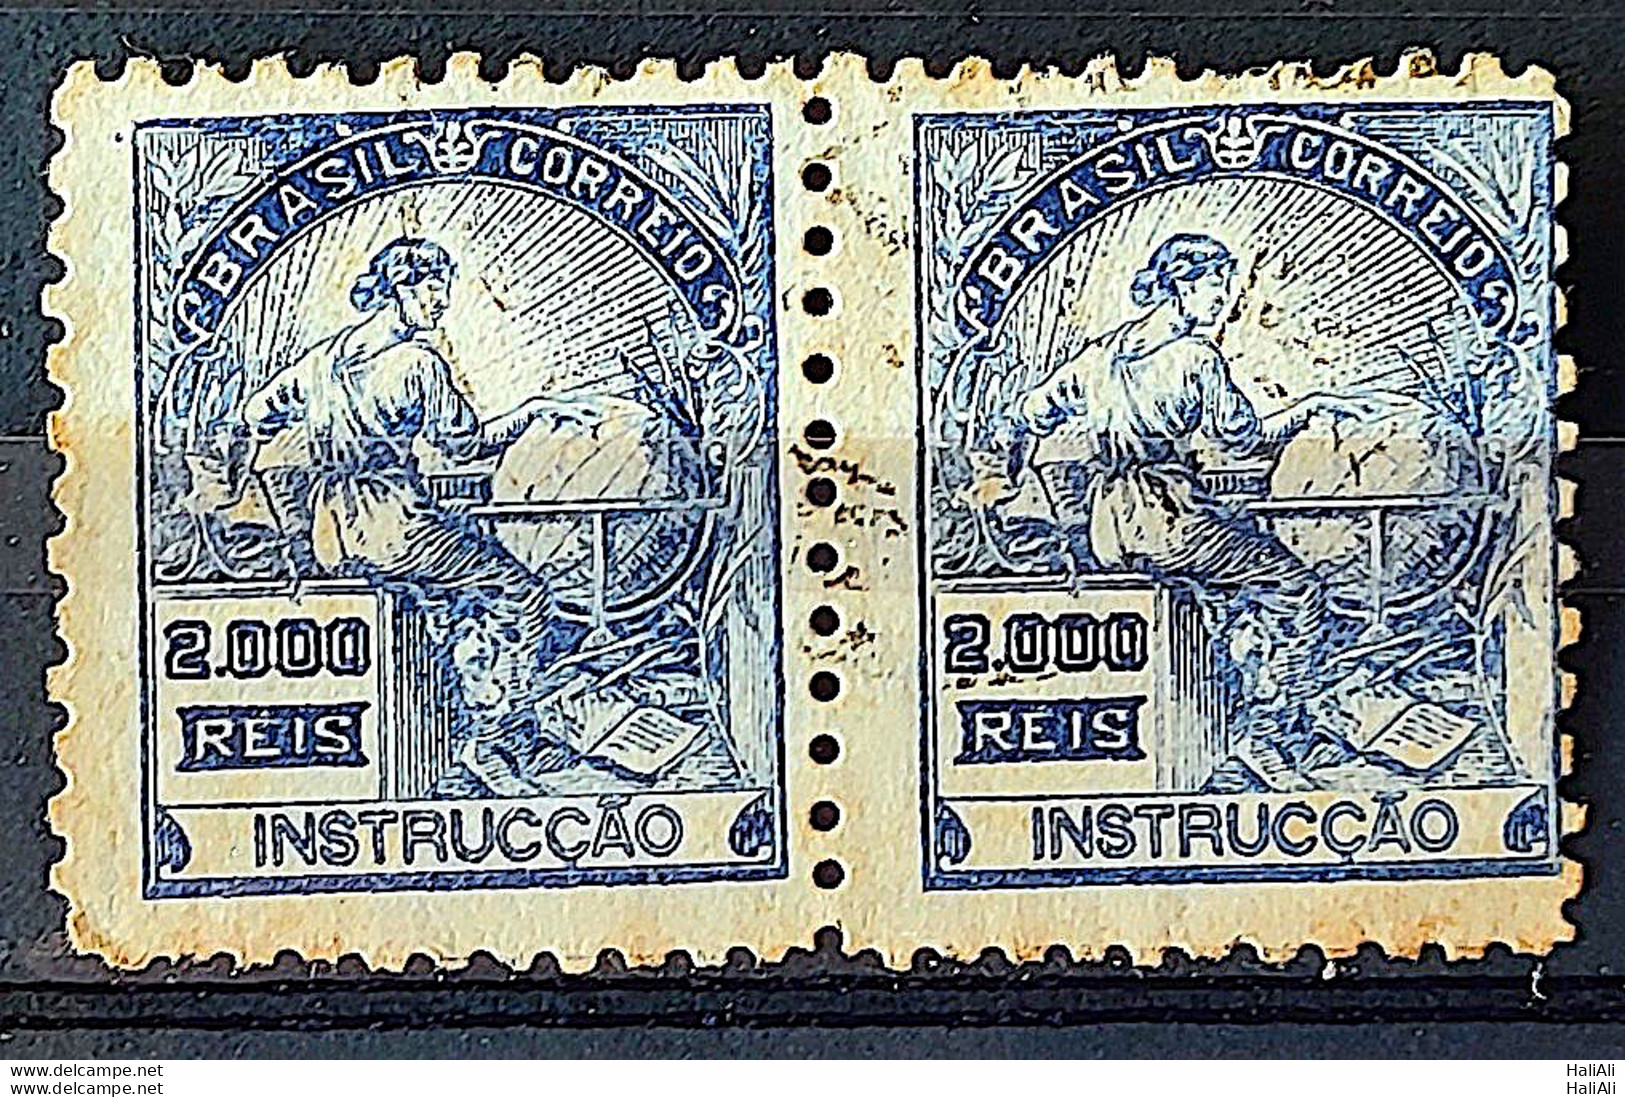 Brazil Regular Stamp Cod Rhm 308 Grandma Instruction 2000 Reis Filigree N 1936 Pair Circulated 2 - Gebruikt